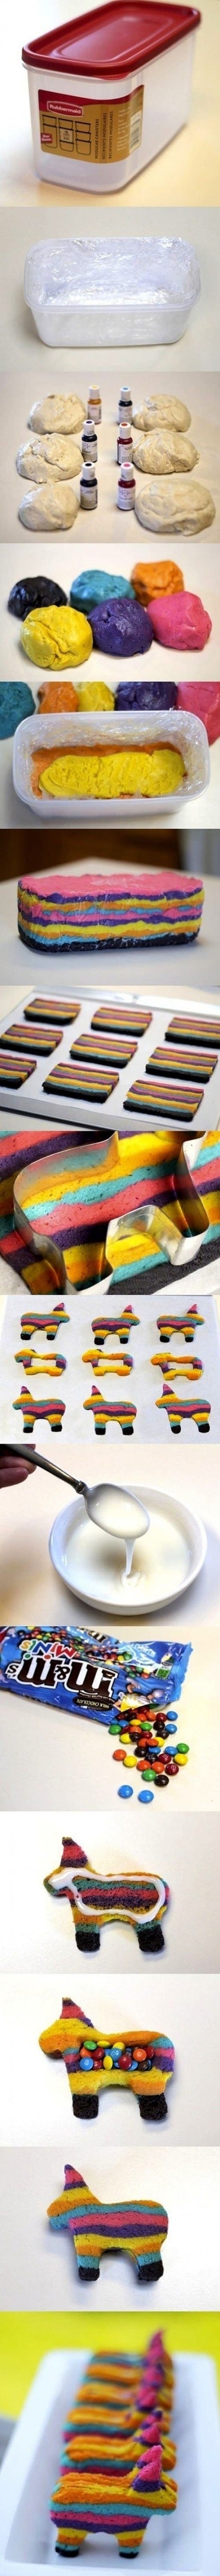 funny-picture-rainbow-dessert